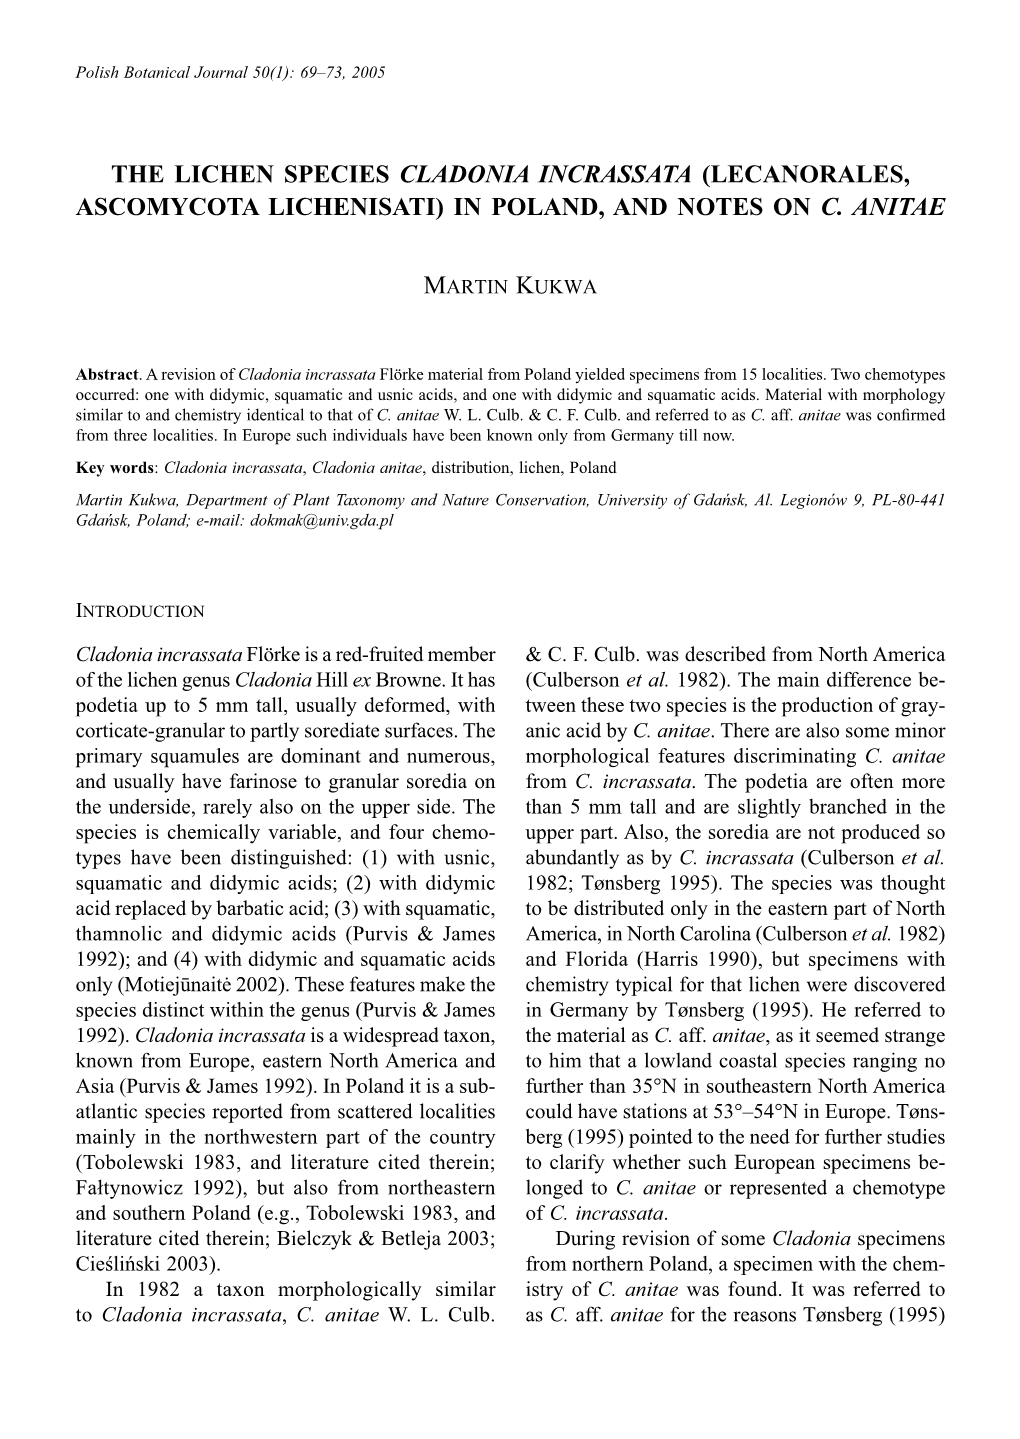 The Lichen Species Cladonia Incrassata (Lecanorales, Ascomycota Lichenisati) in Poland, and Notes on C